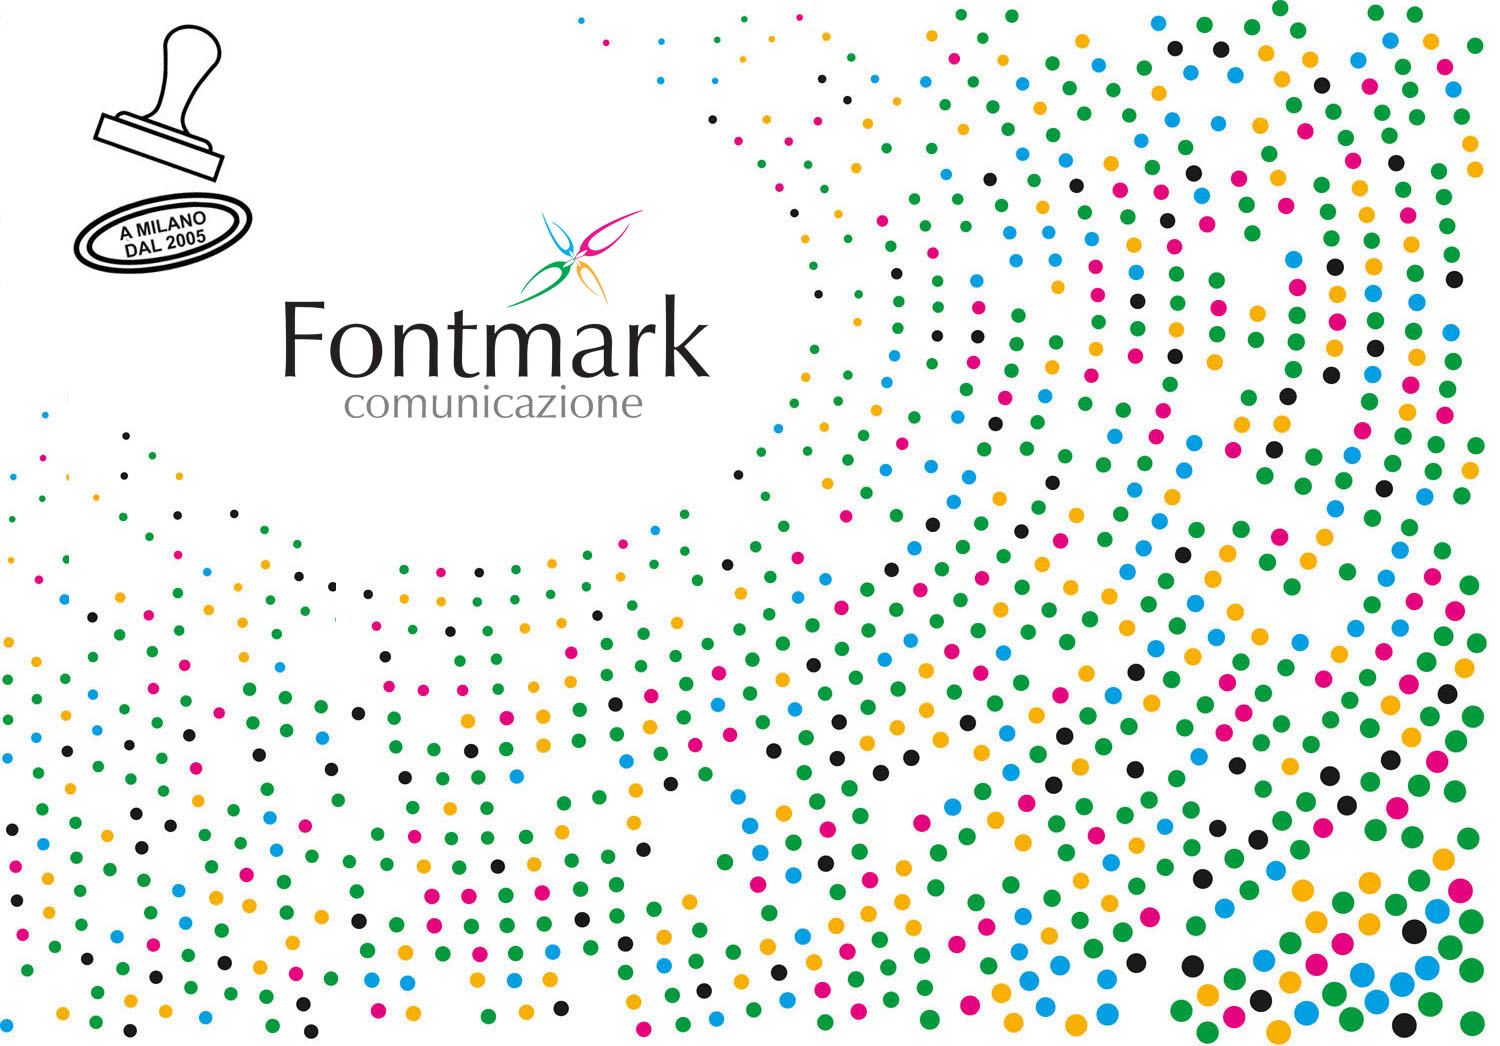 Fontmark Comunicazione logo